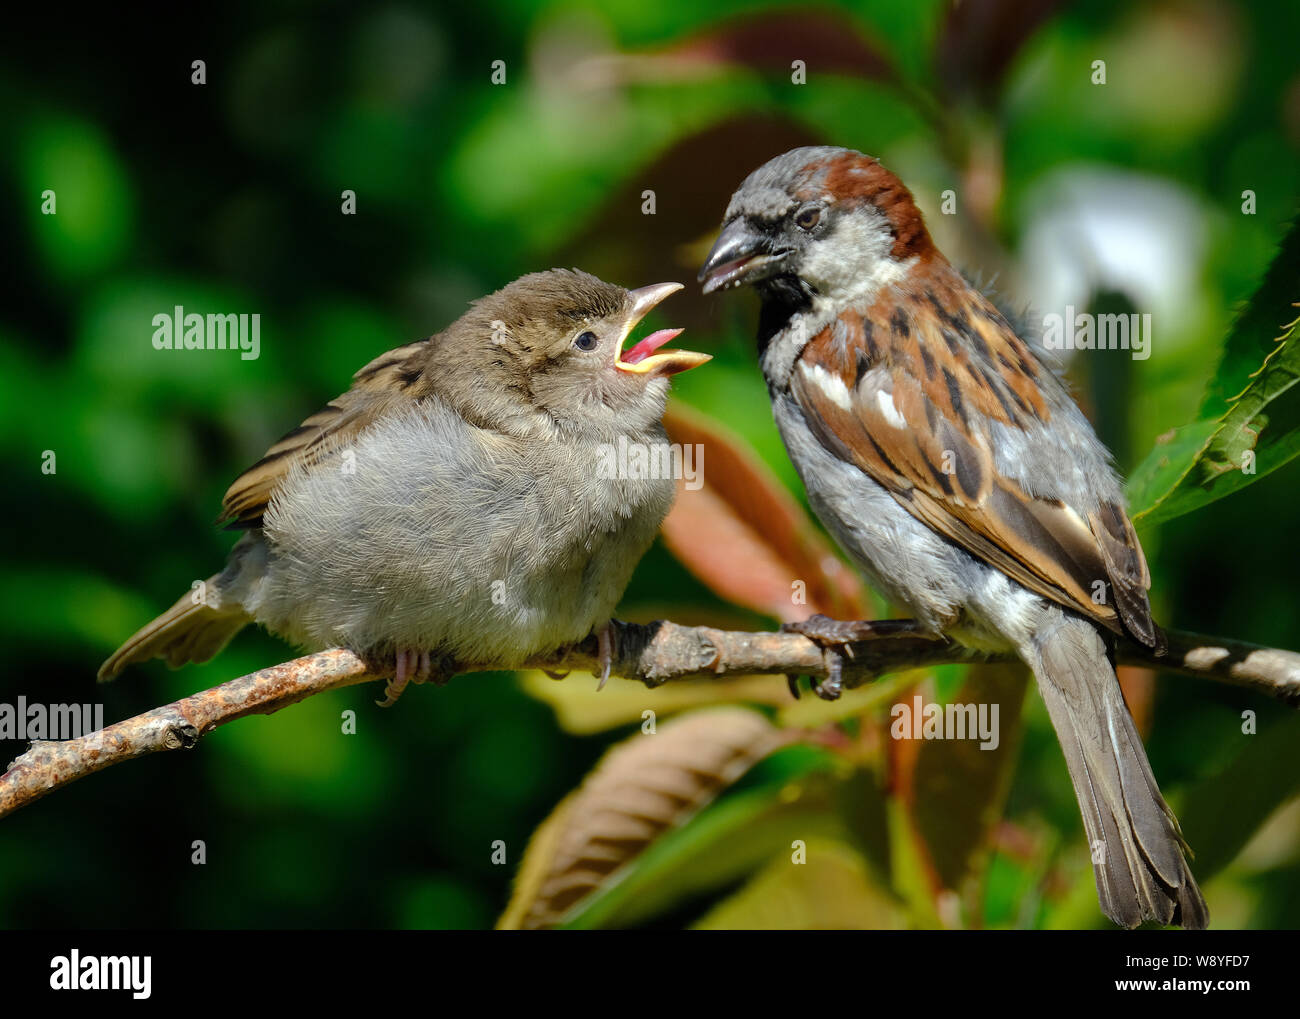 Male sparrow feeding baby in tree. Stock Photo